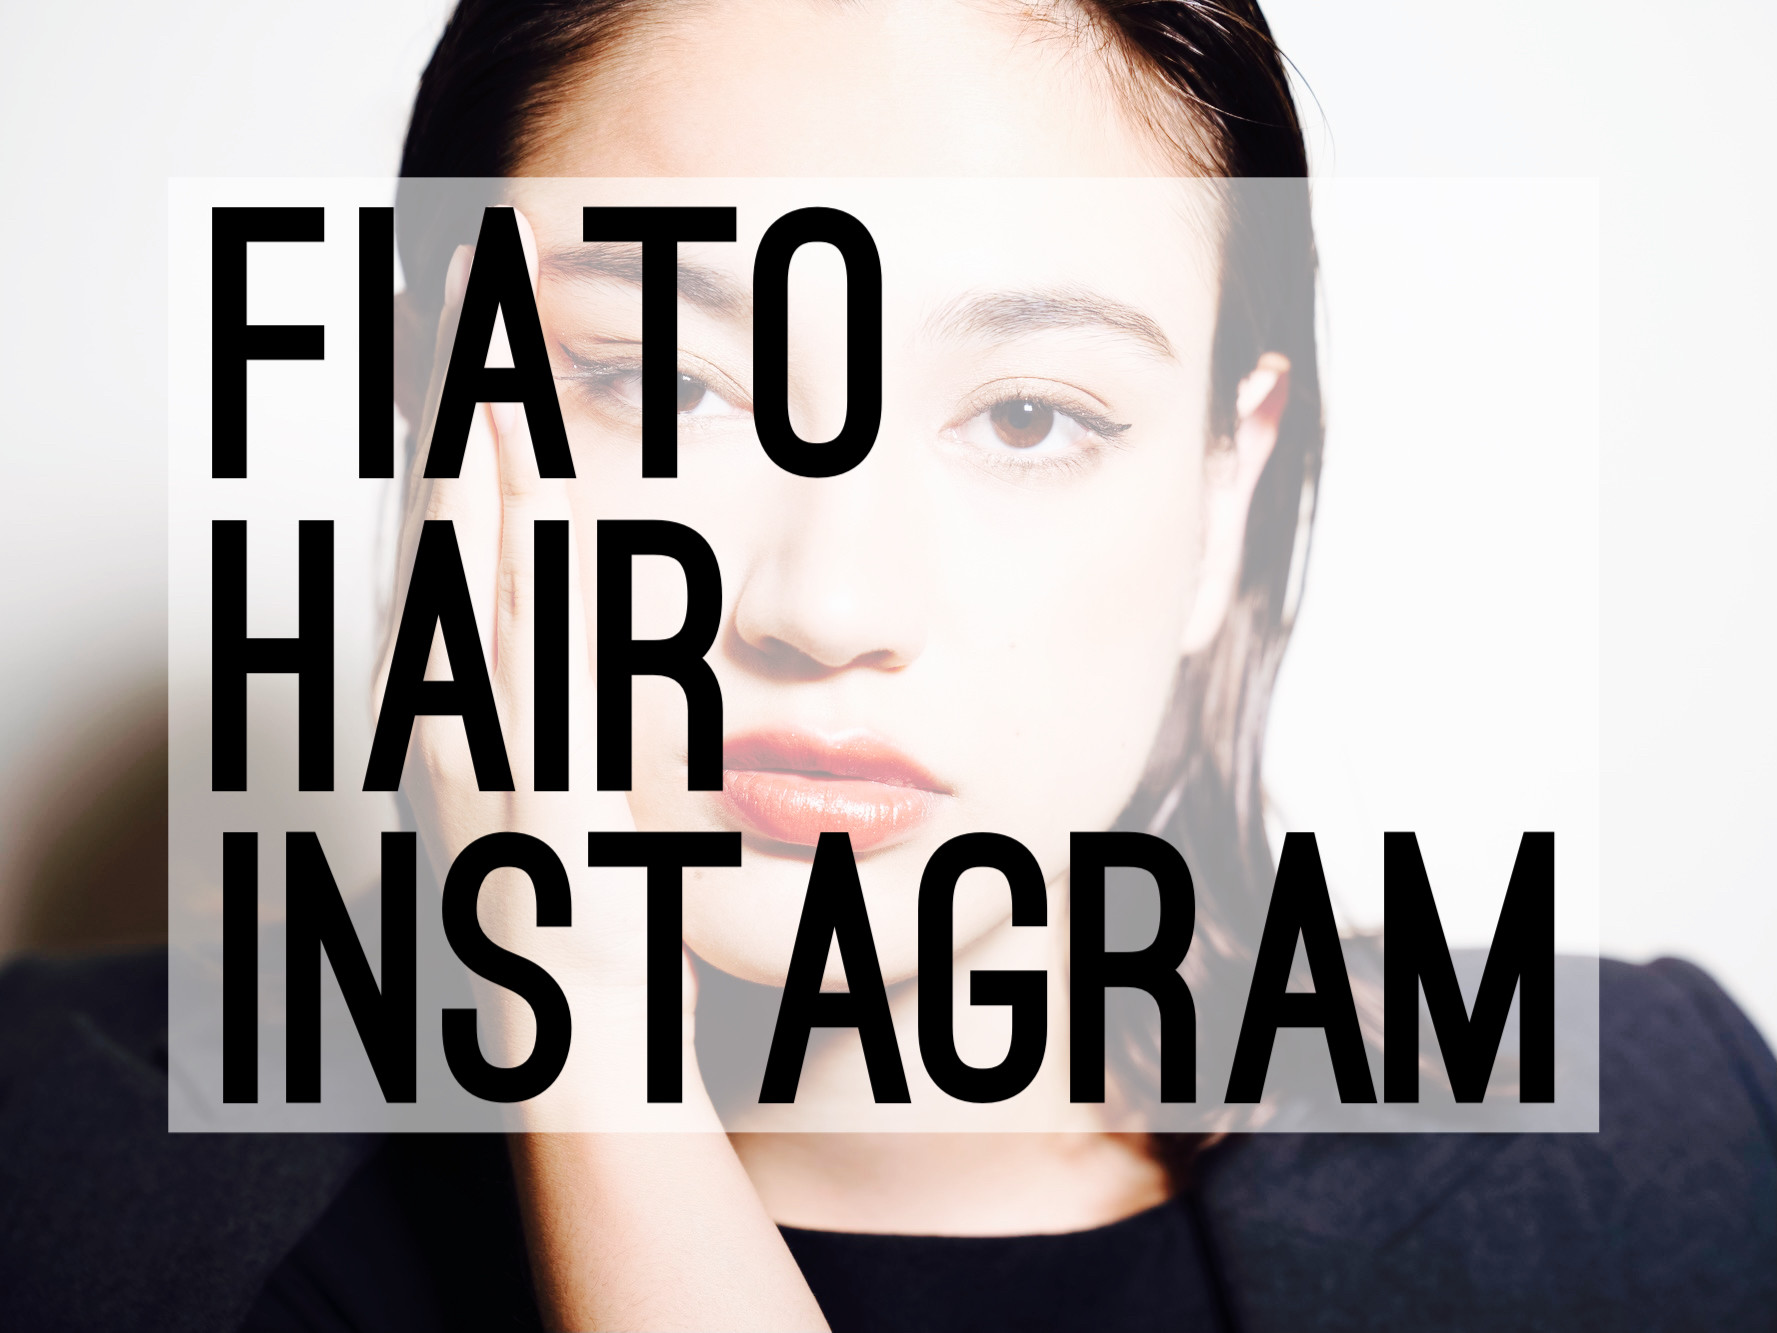 Fiato Hair 赤羽 instagram 